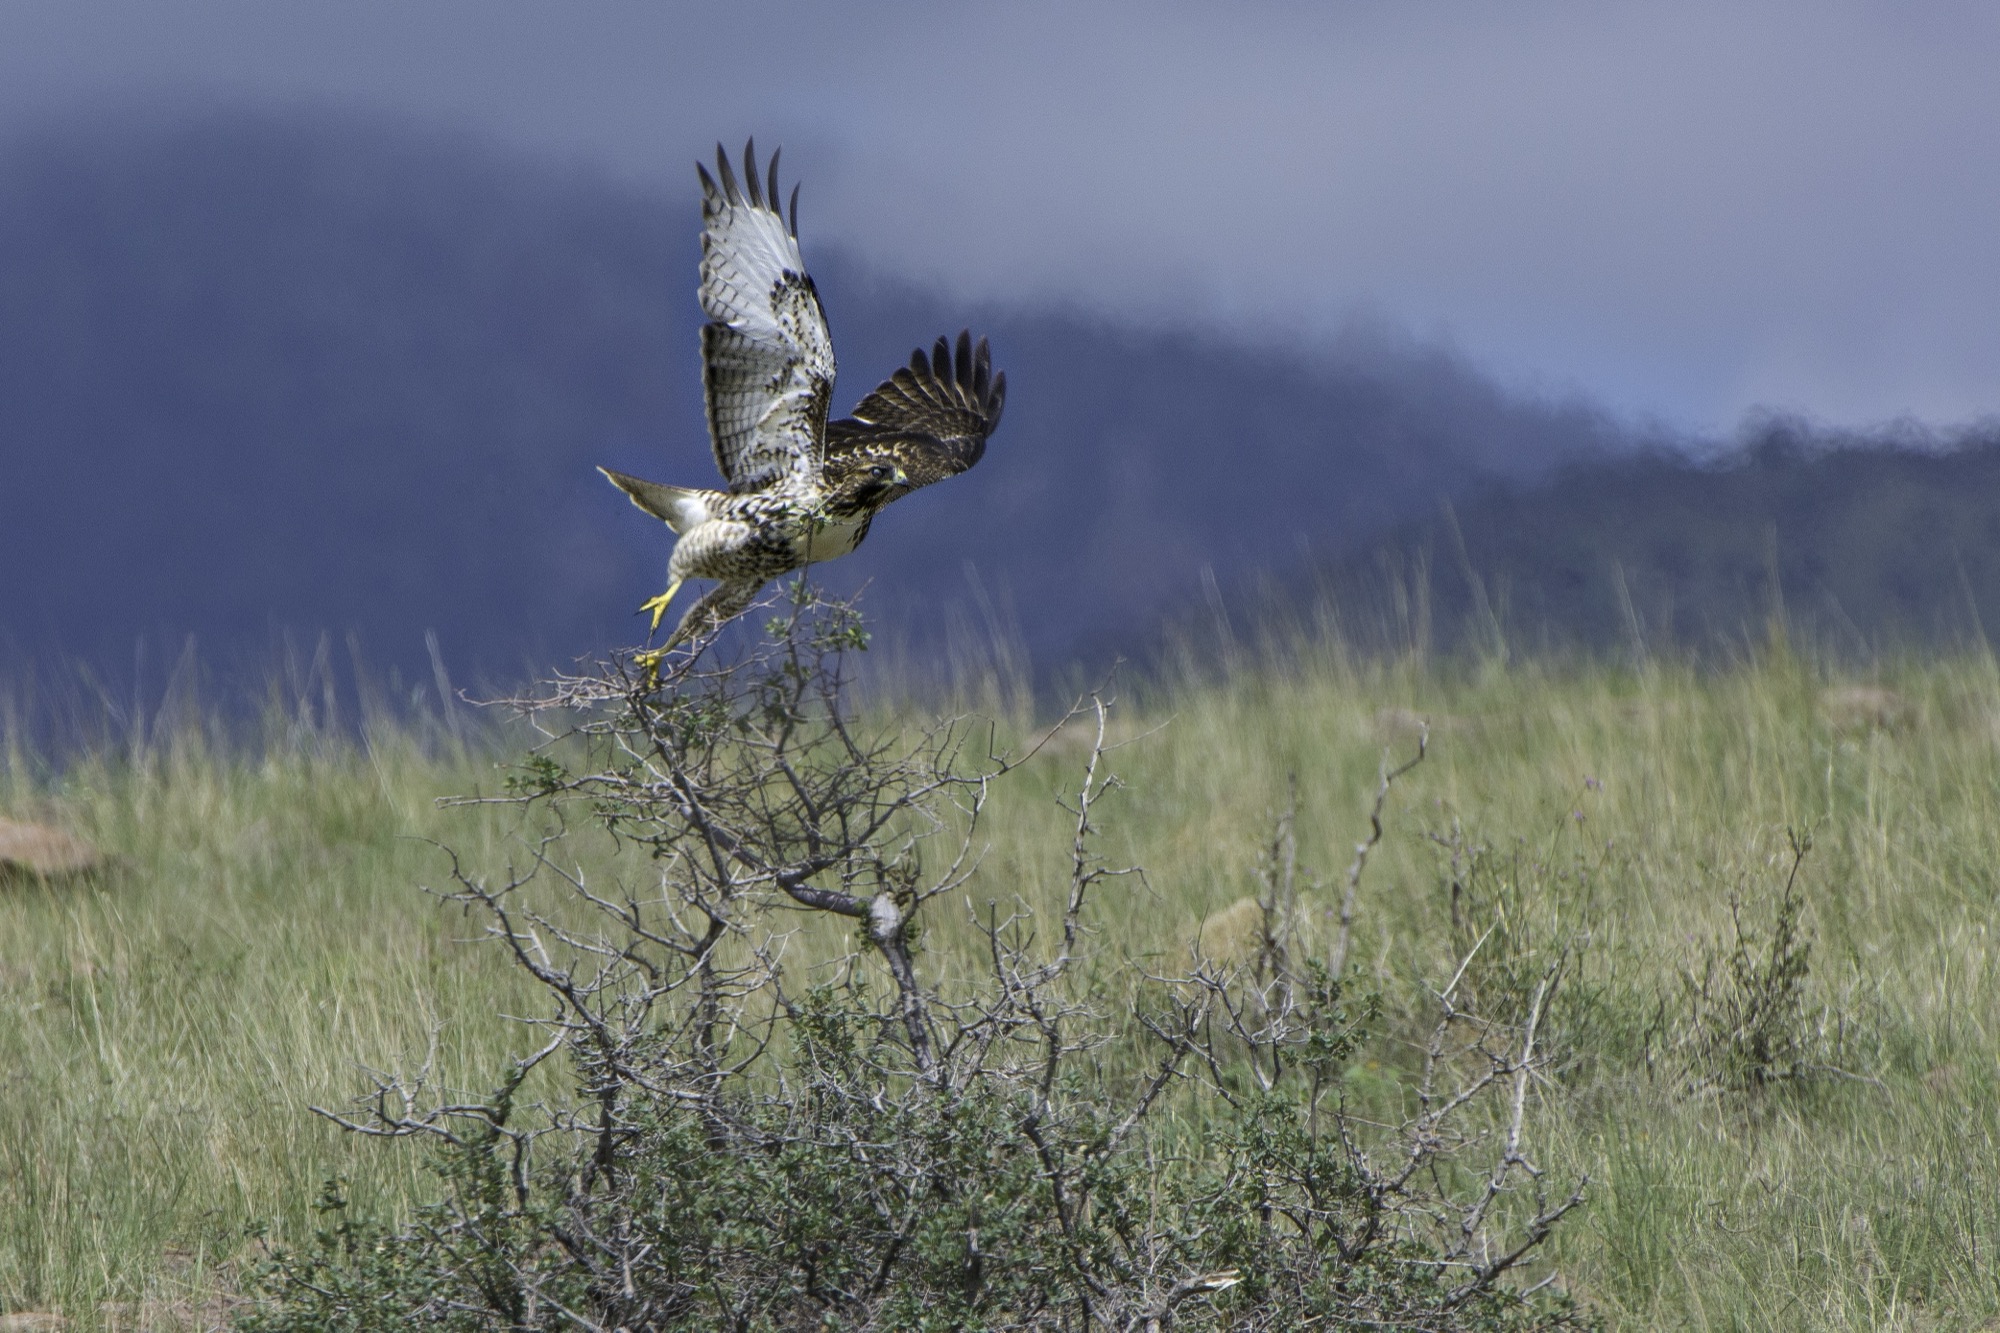 A hawk flying over tall grass